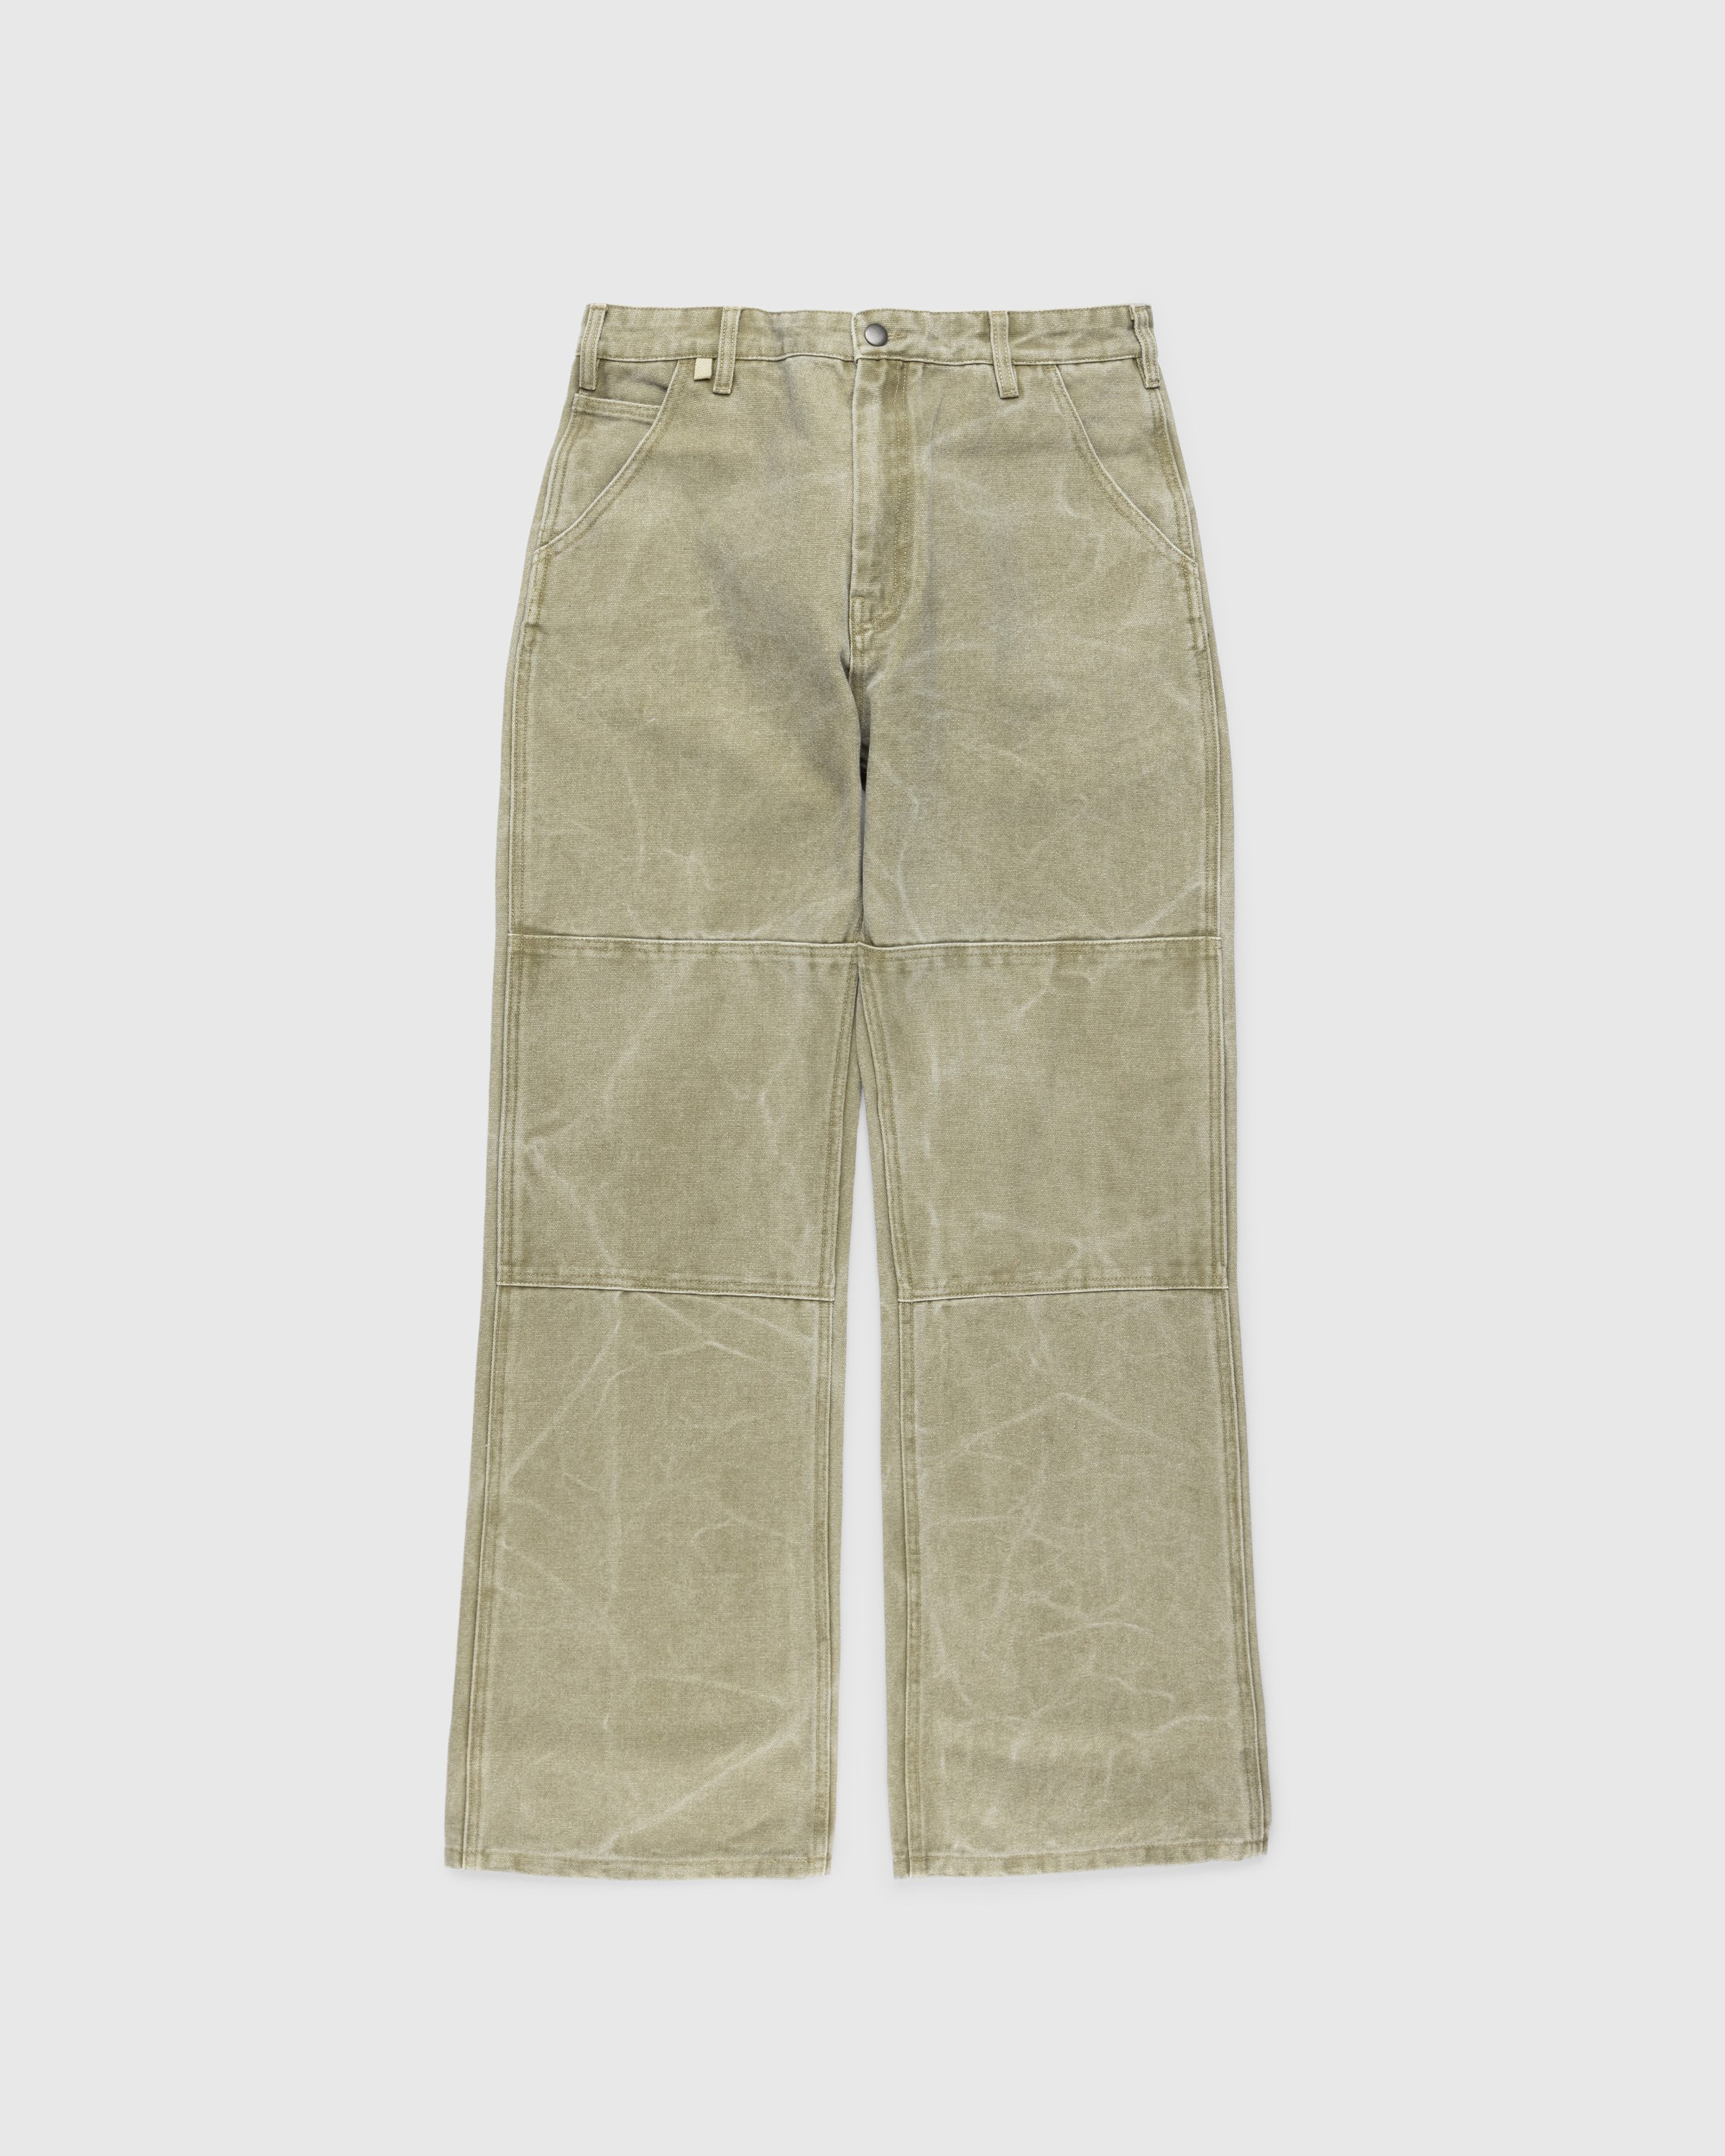 Acne Studios - Cotton Canvas Trousers Khaki Beige - Clothing - Green - Image 1